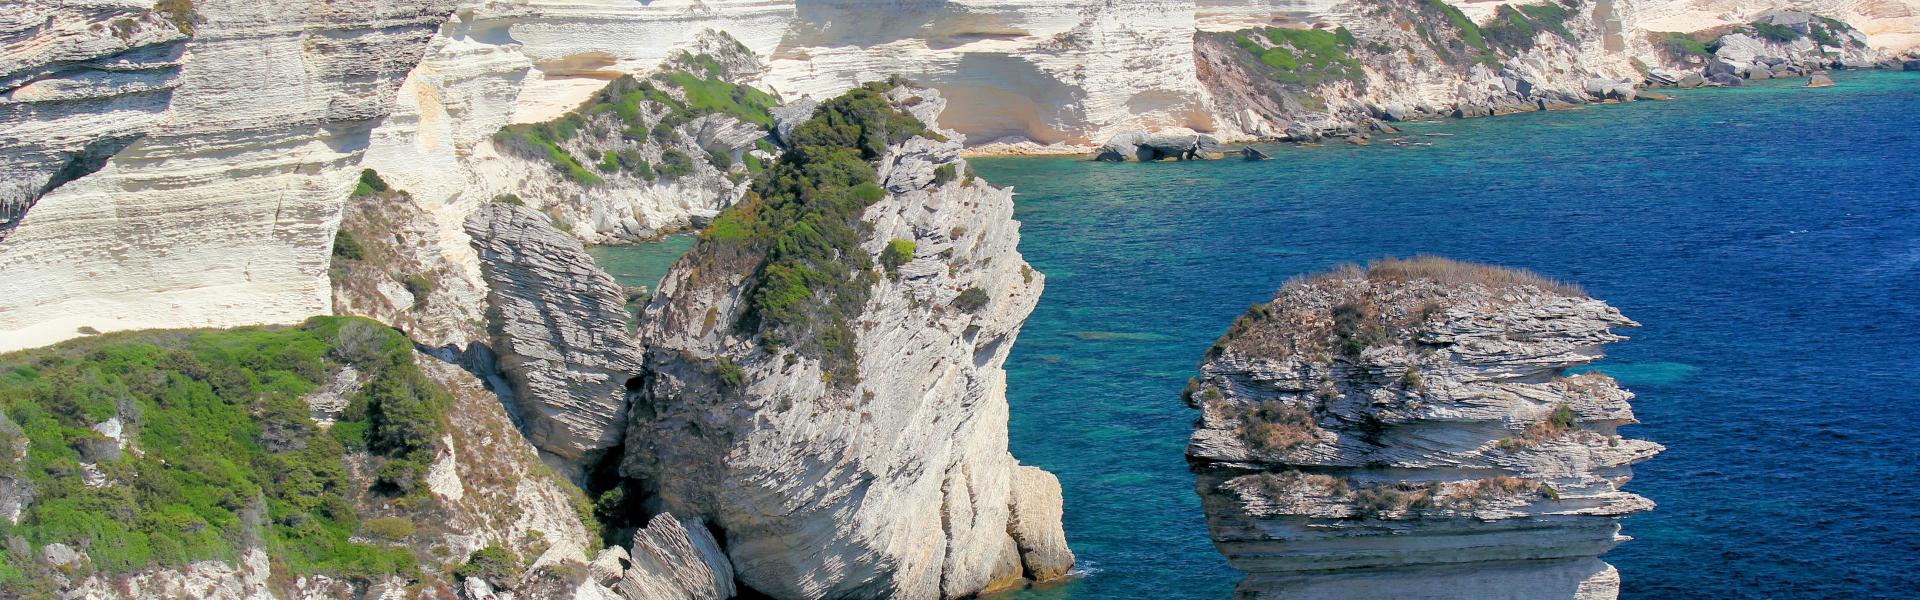 Location de vacances à Sartène - Corse-du-Sud - Amivac